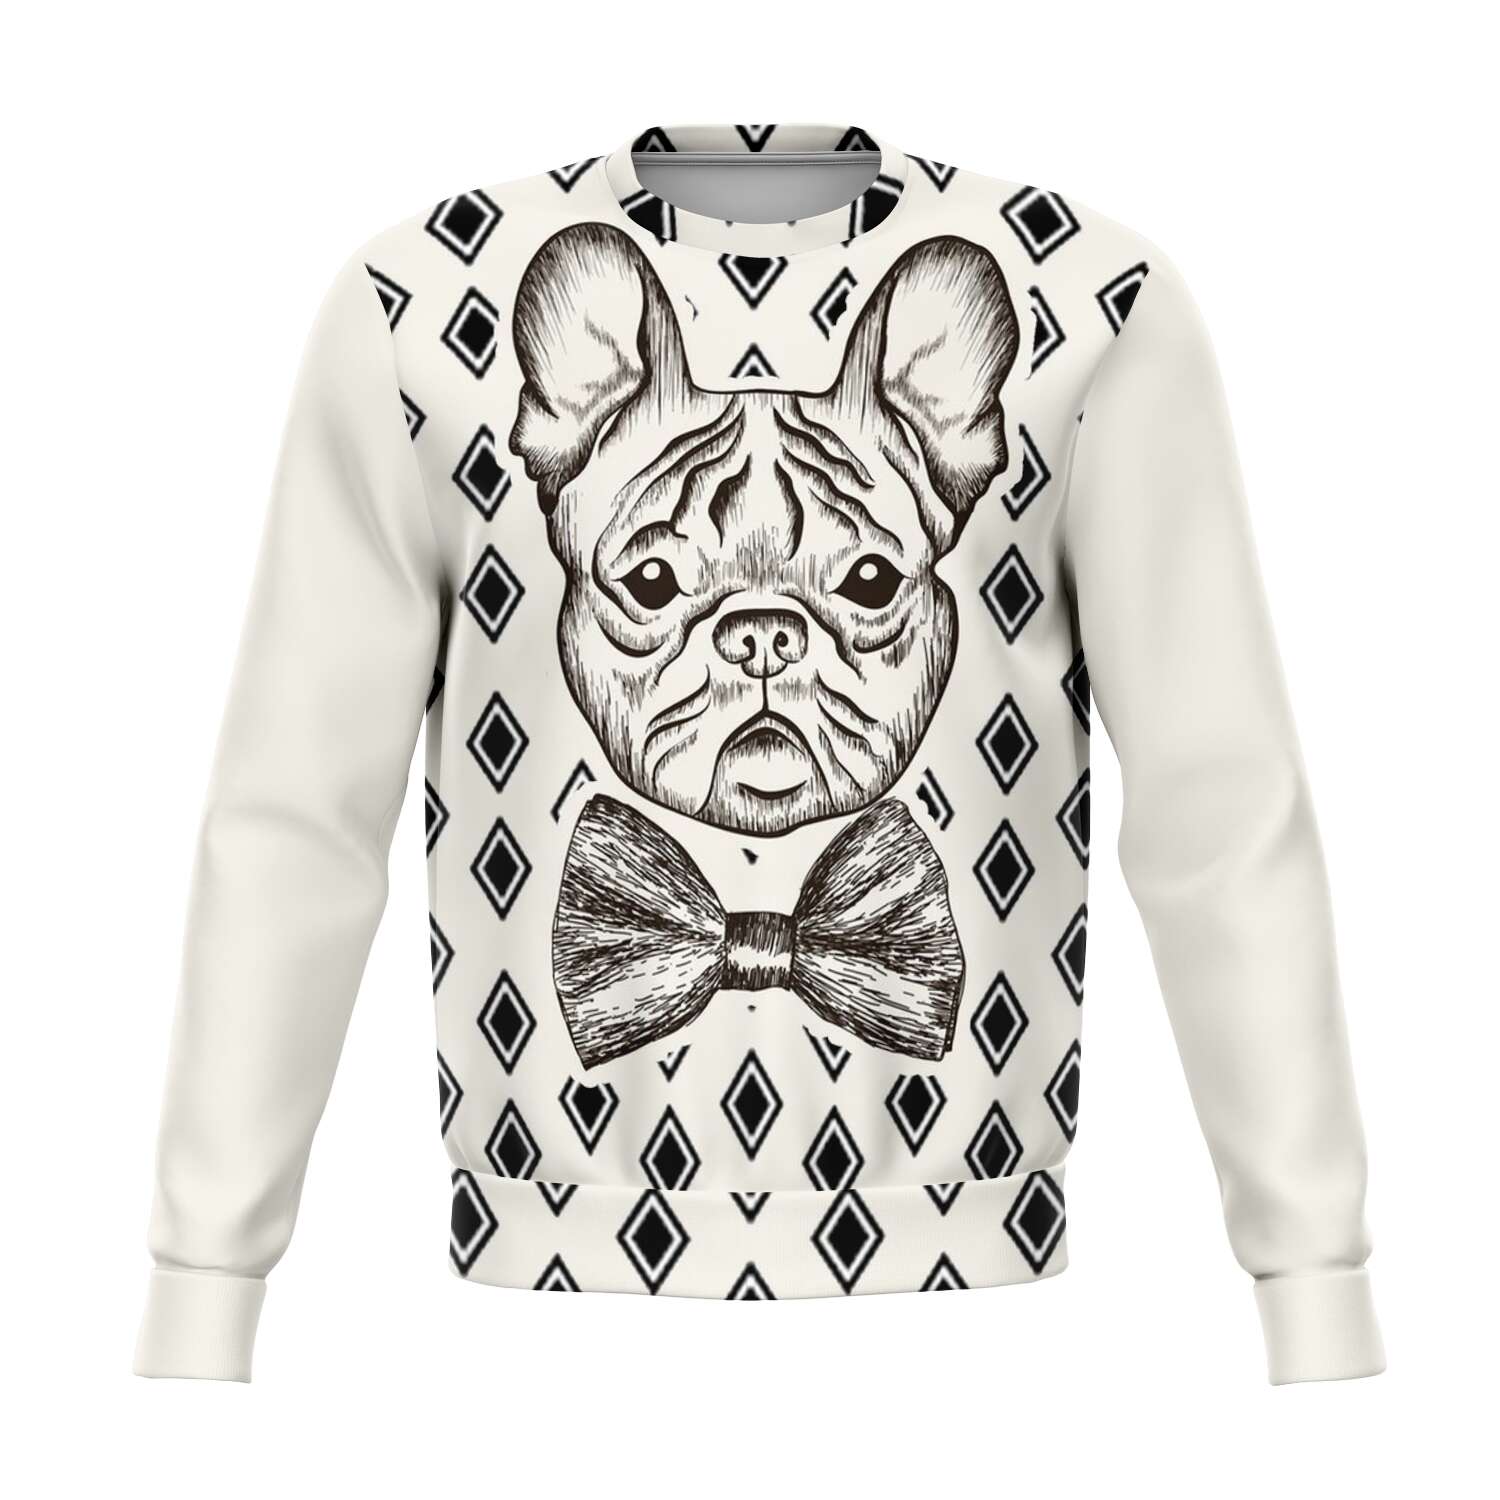 Ace French Bulldog Sweater - Frenchie Bulldog Shop